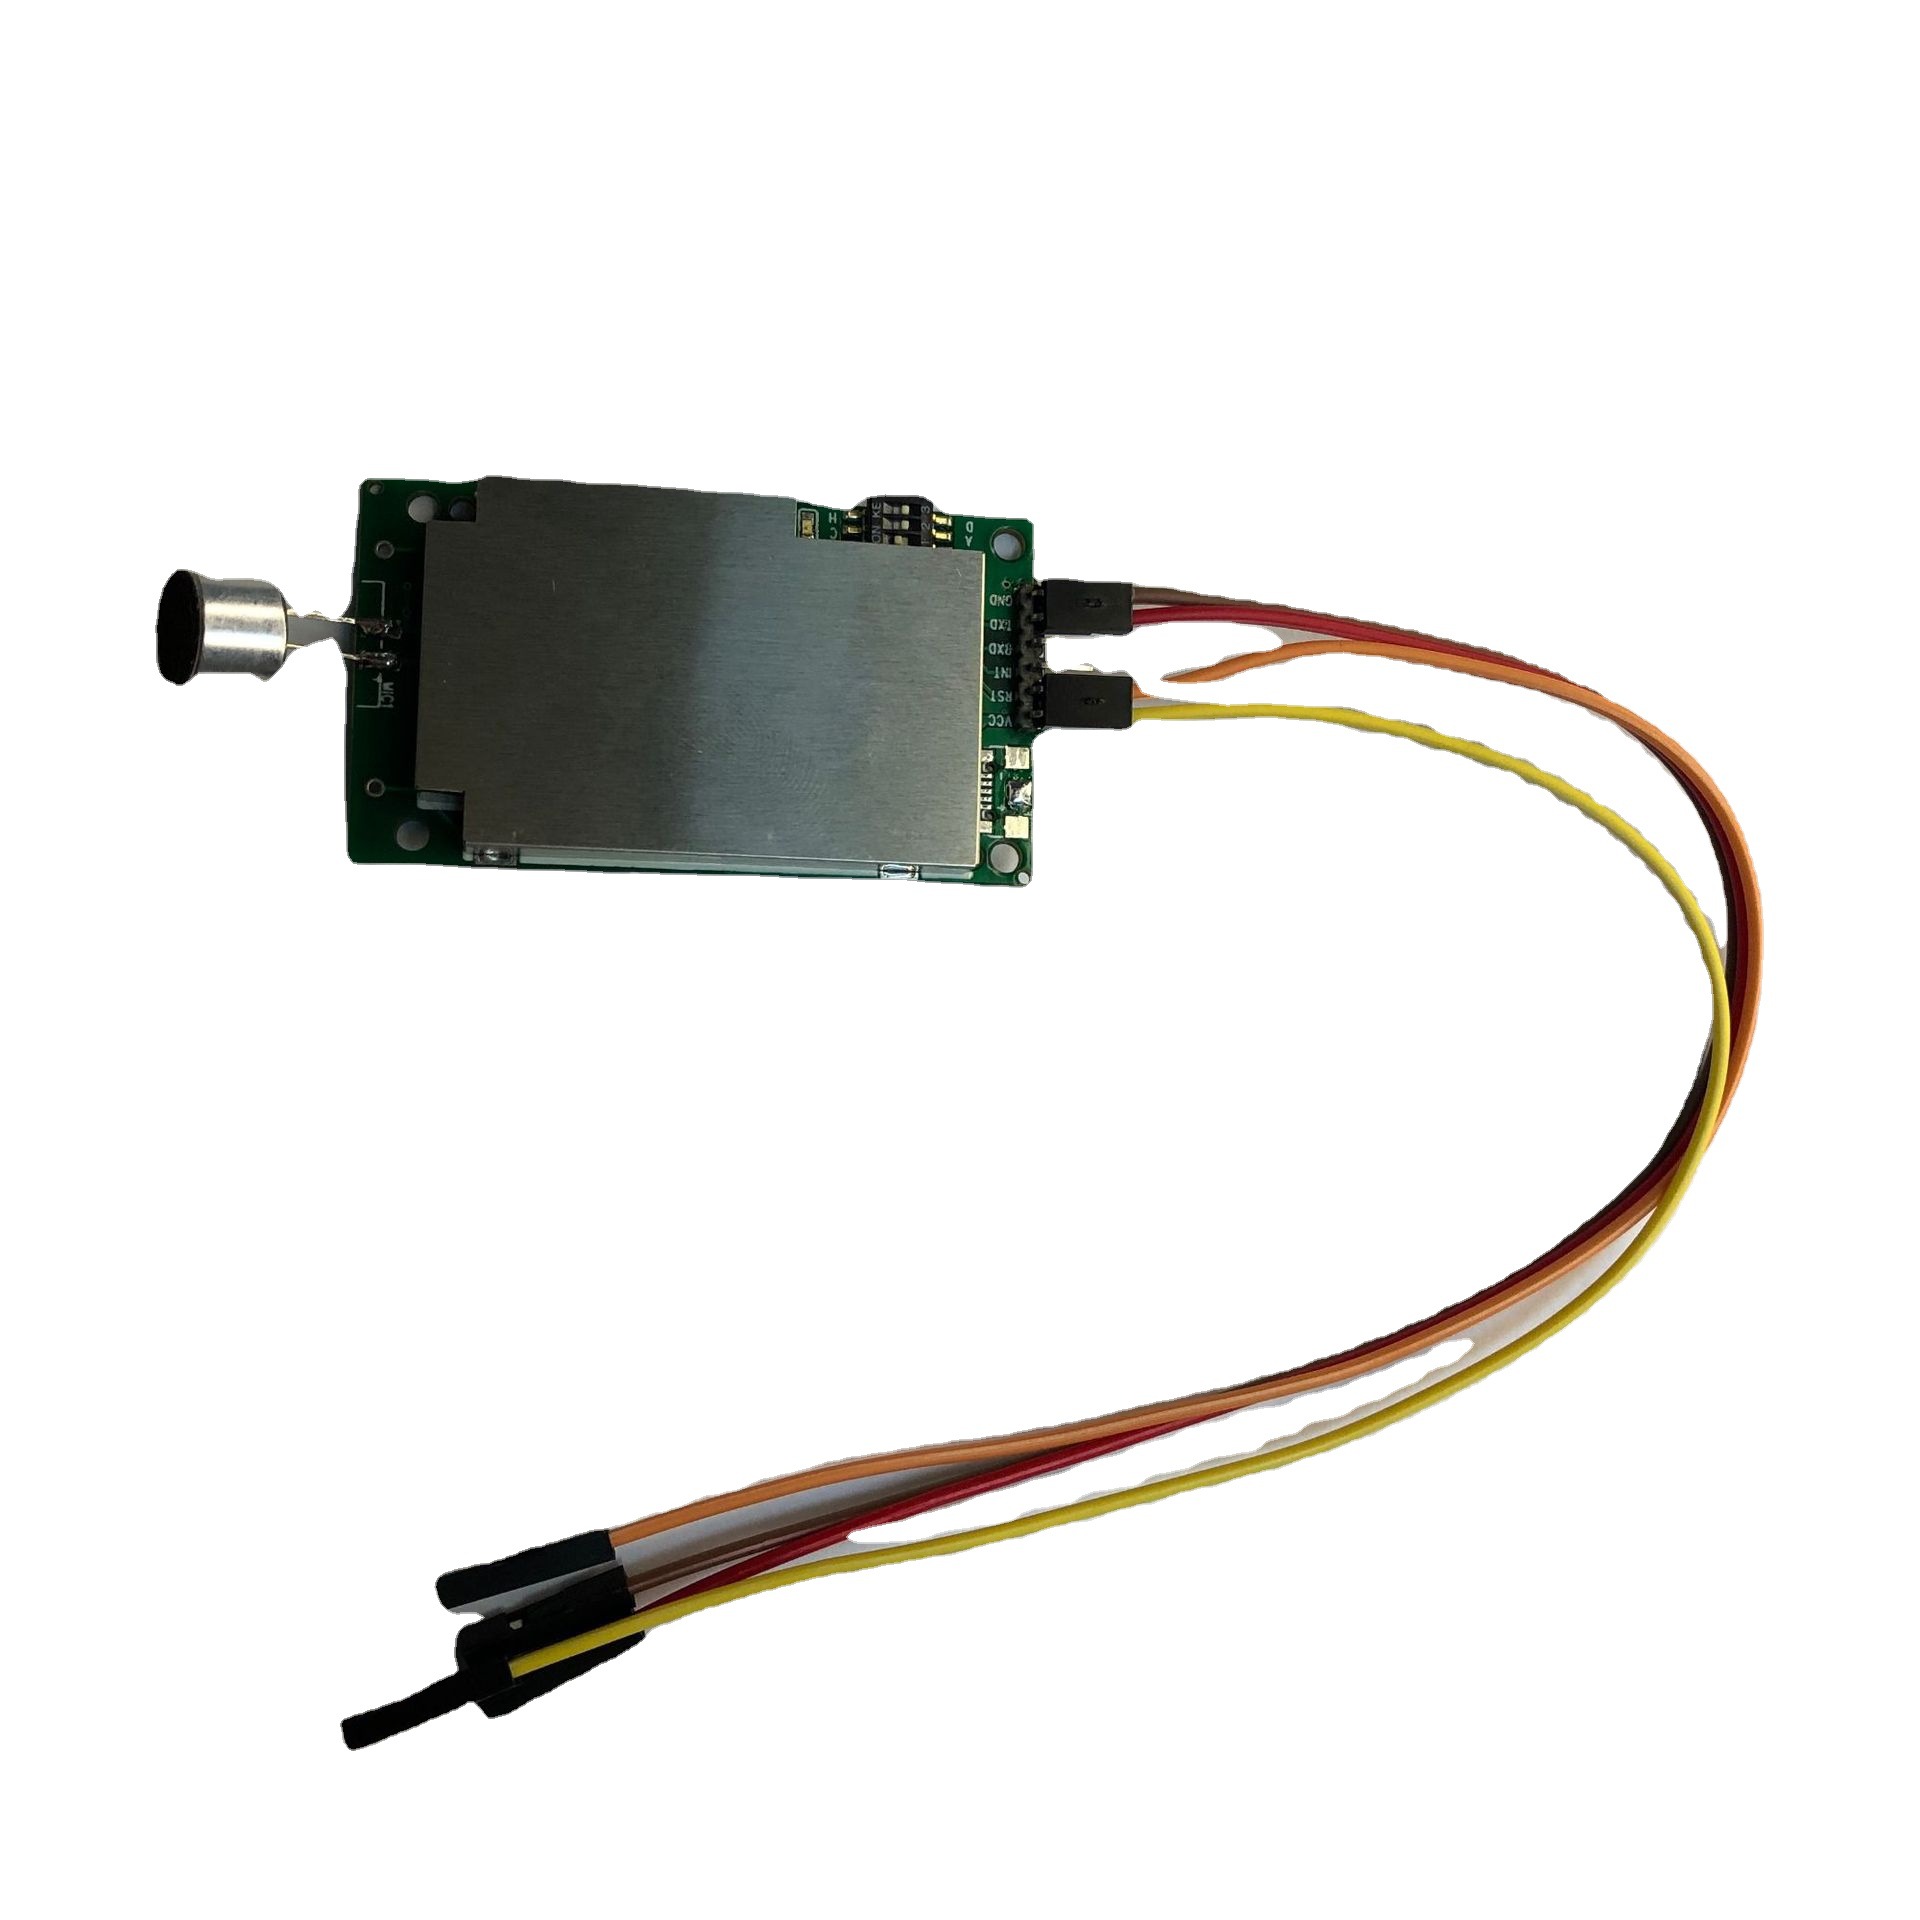 goods in stock small-scale noise sensor modular Noise sensor Tester Sound sensor Low power consumption